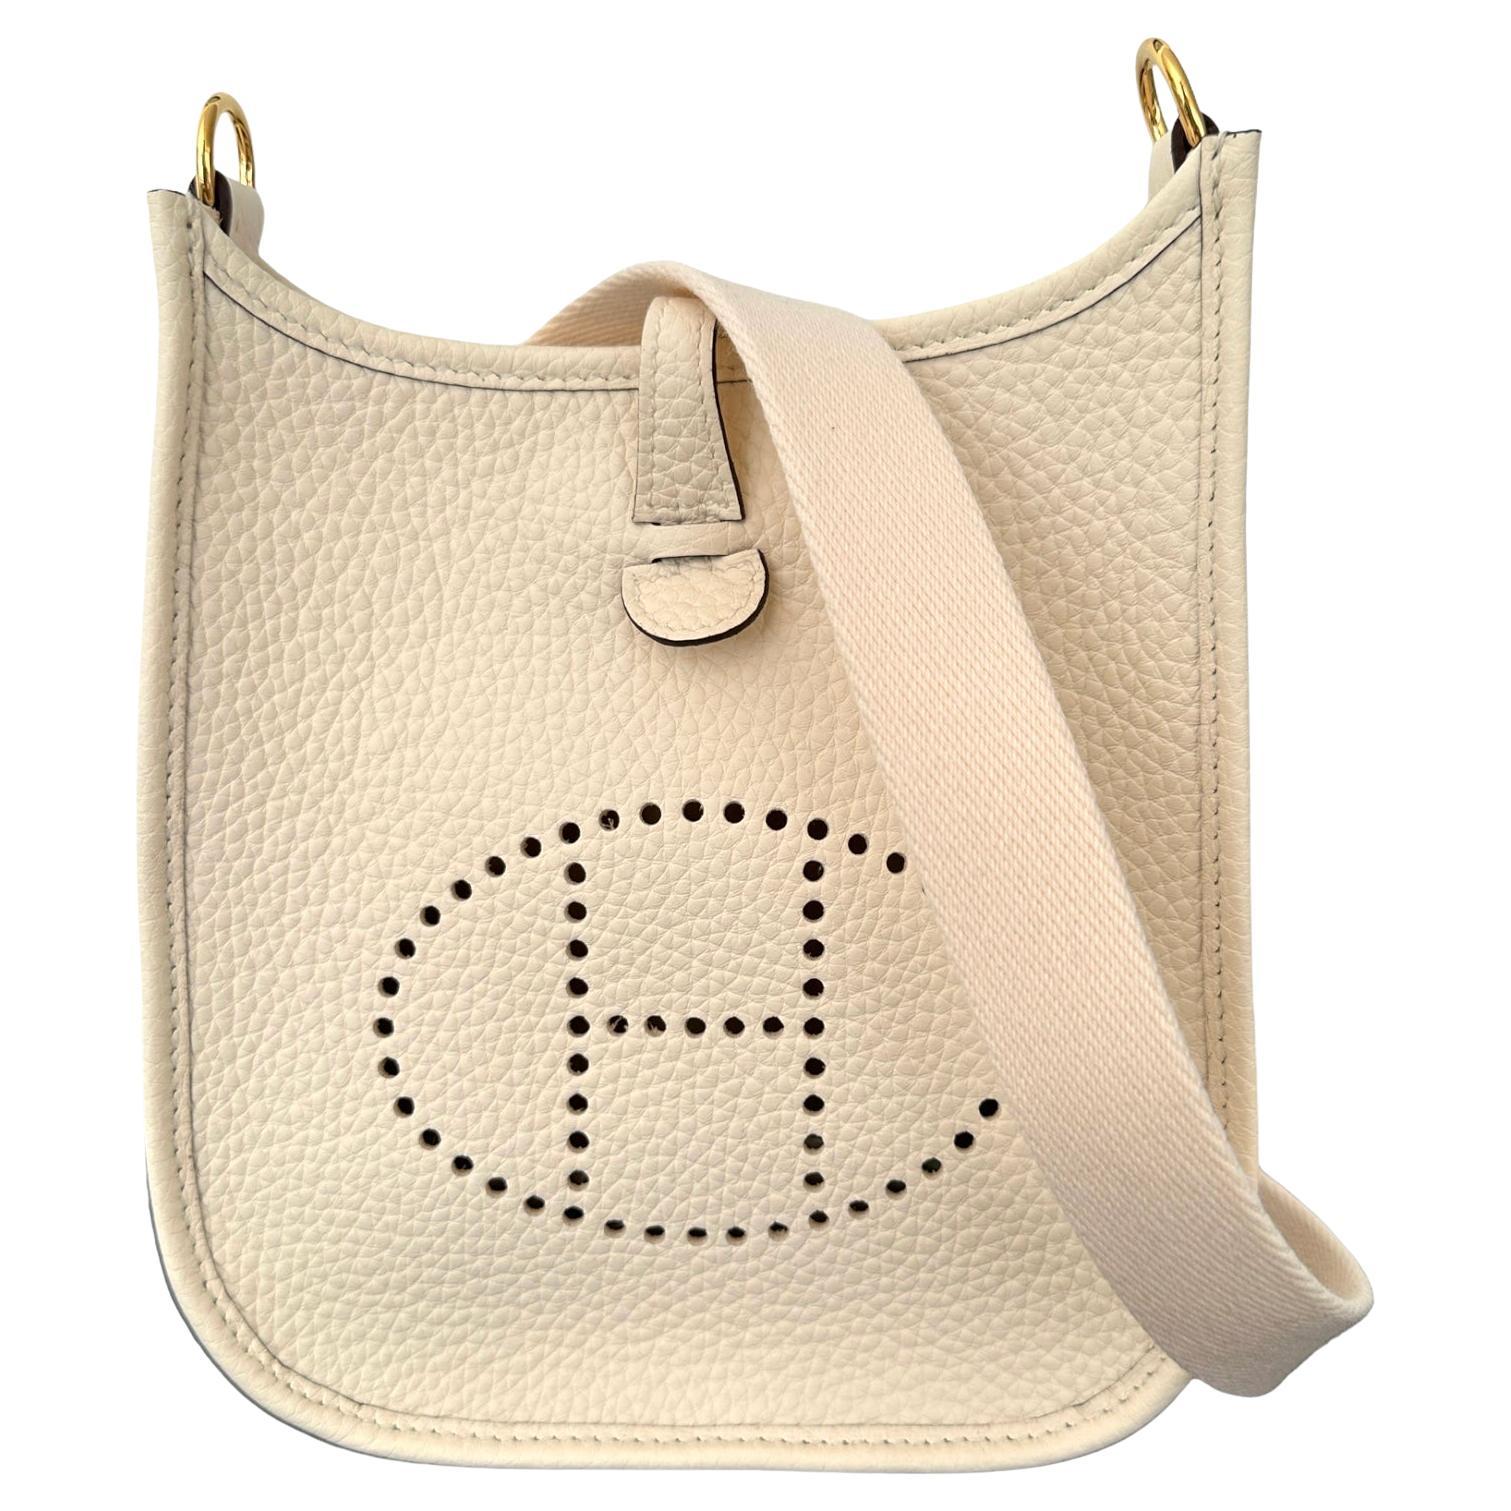 Affordable hermes evelyn bag For Sale, Luxury